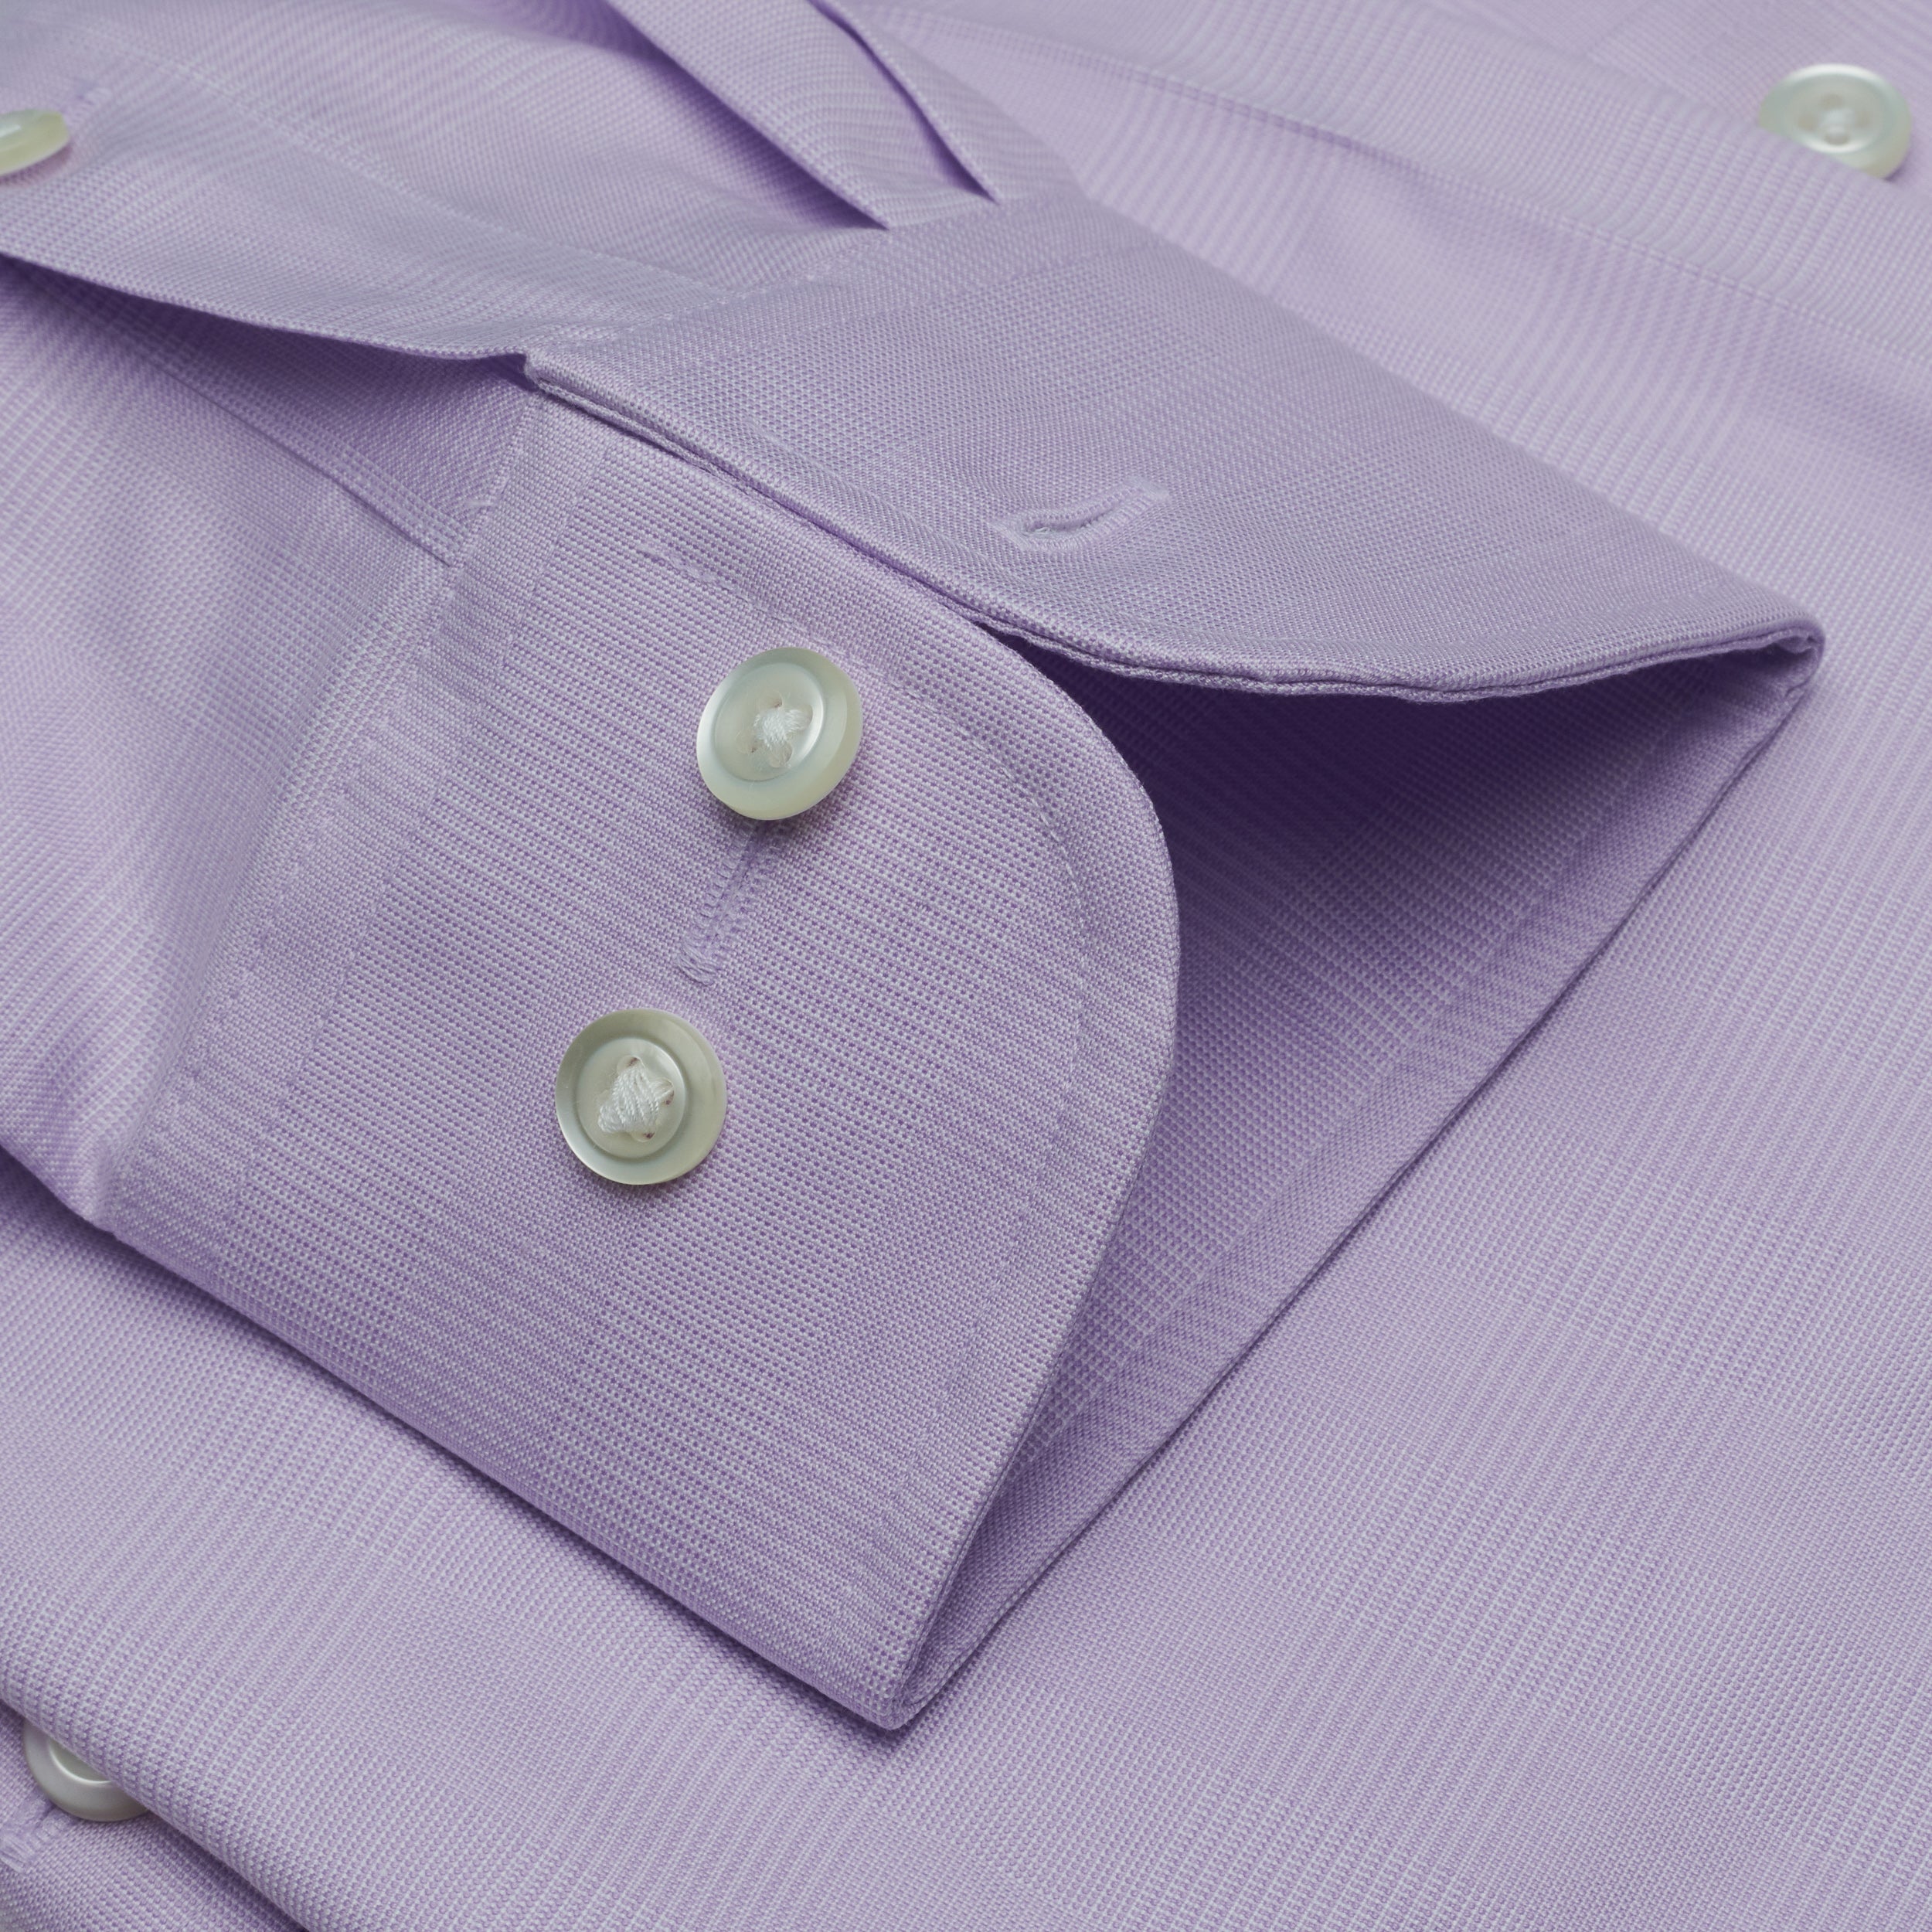 085 TF SC - Lavender Glen Plaid Tailored Fit Spread Collar